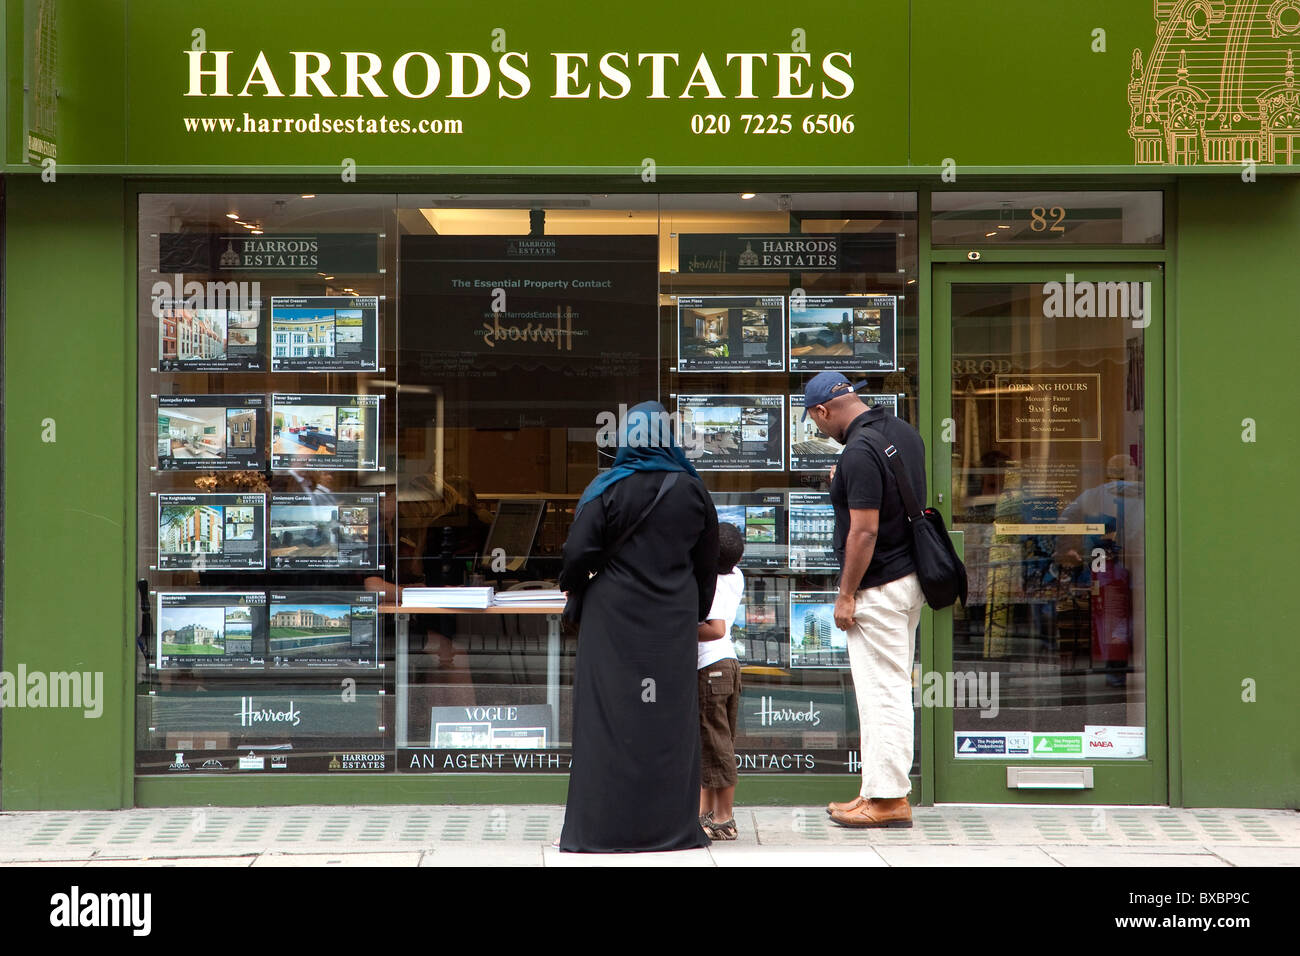 harrods-estates-real-estate-agent-in-london-england-united-kingdom-BXBP9C.jpg  